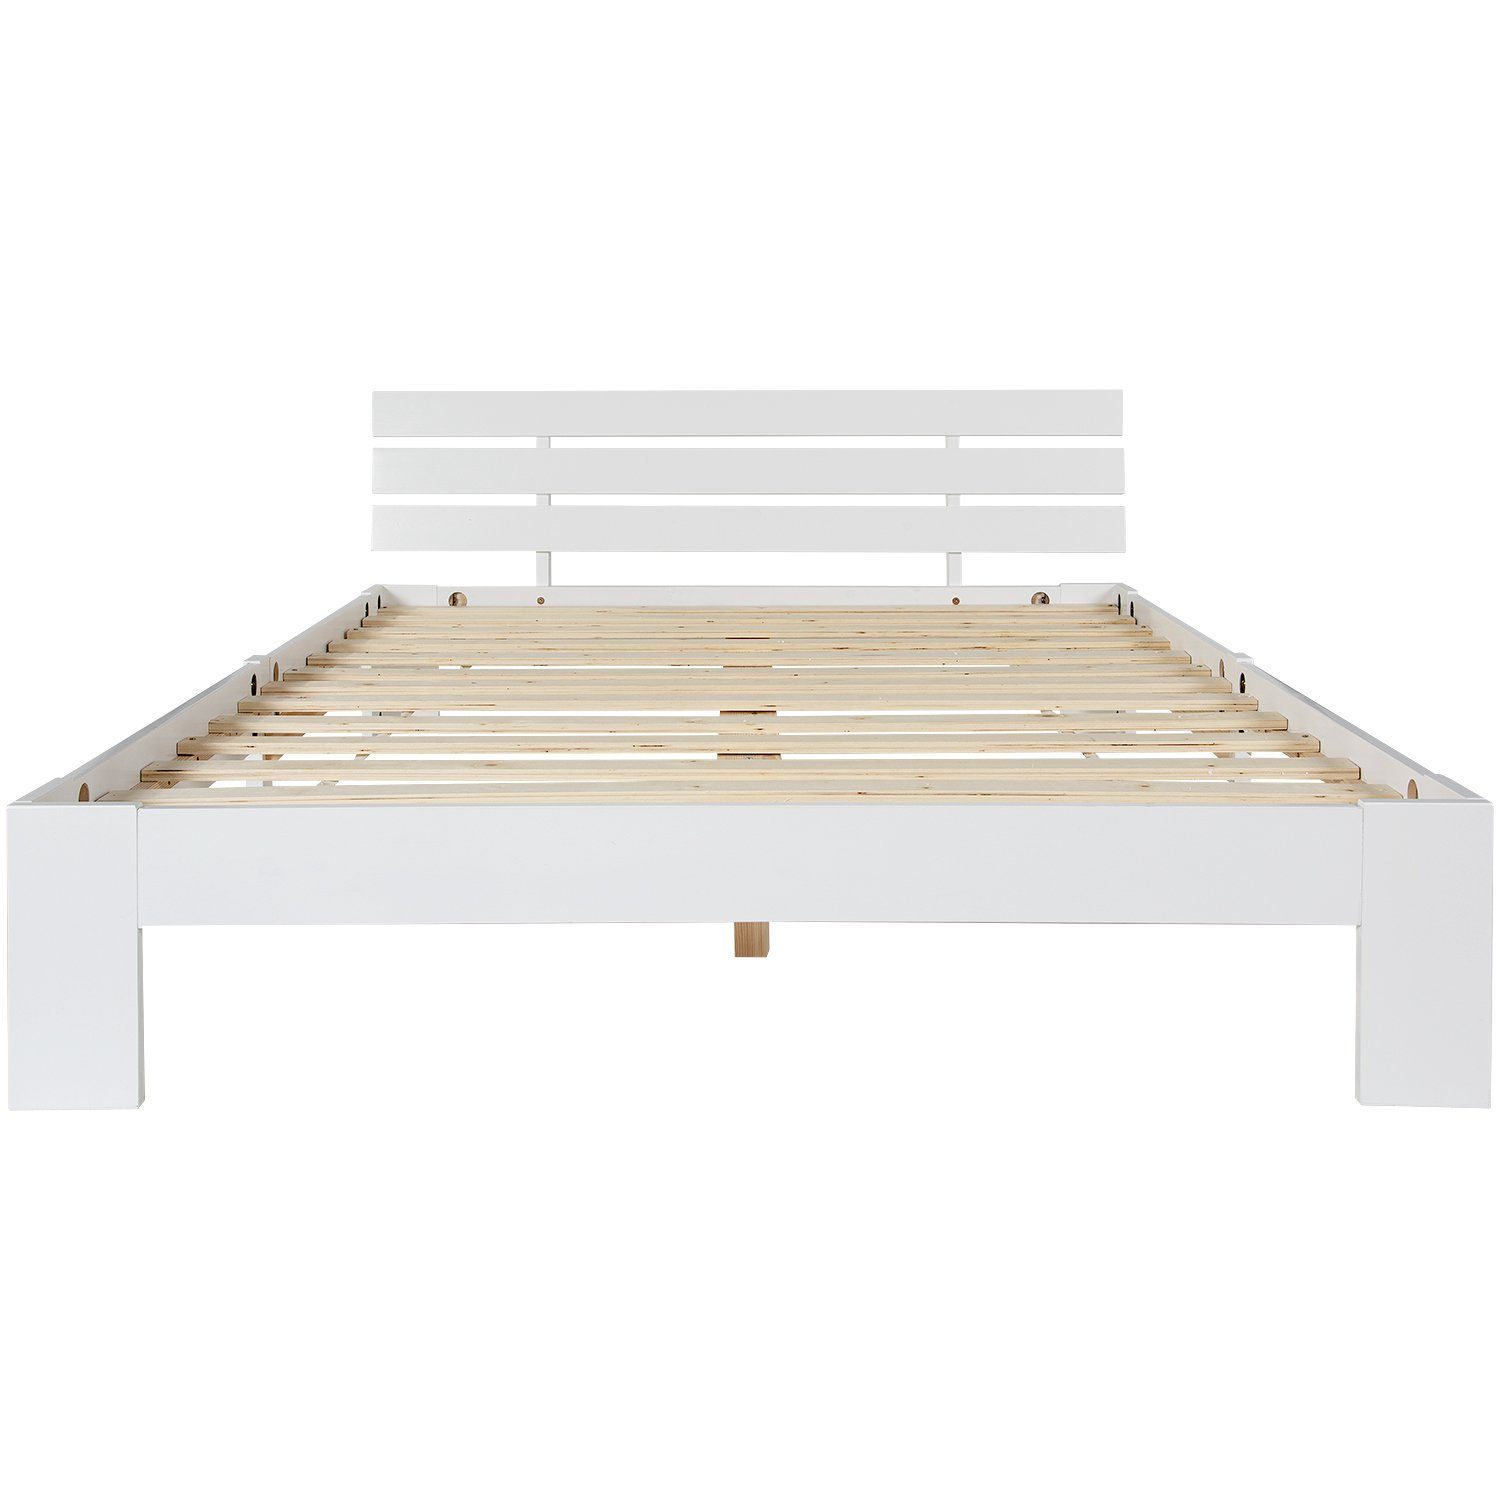 Einzelbett Matratze Bettgestell aus Kinderbett SPLOE Massiv HAUSS Weiß 140x200 Kieferbett Holzbett Holzbett Massivholz (ohne cm)